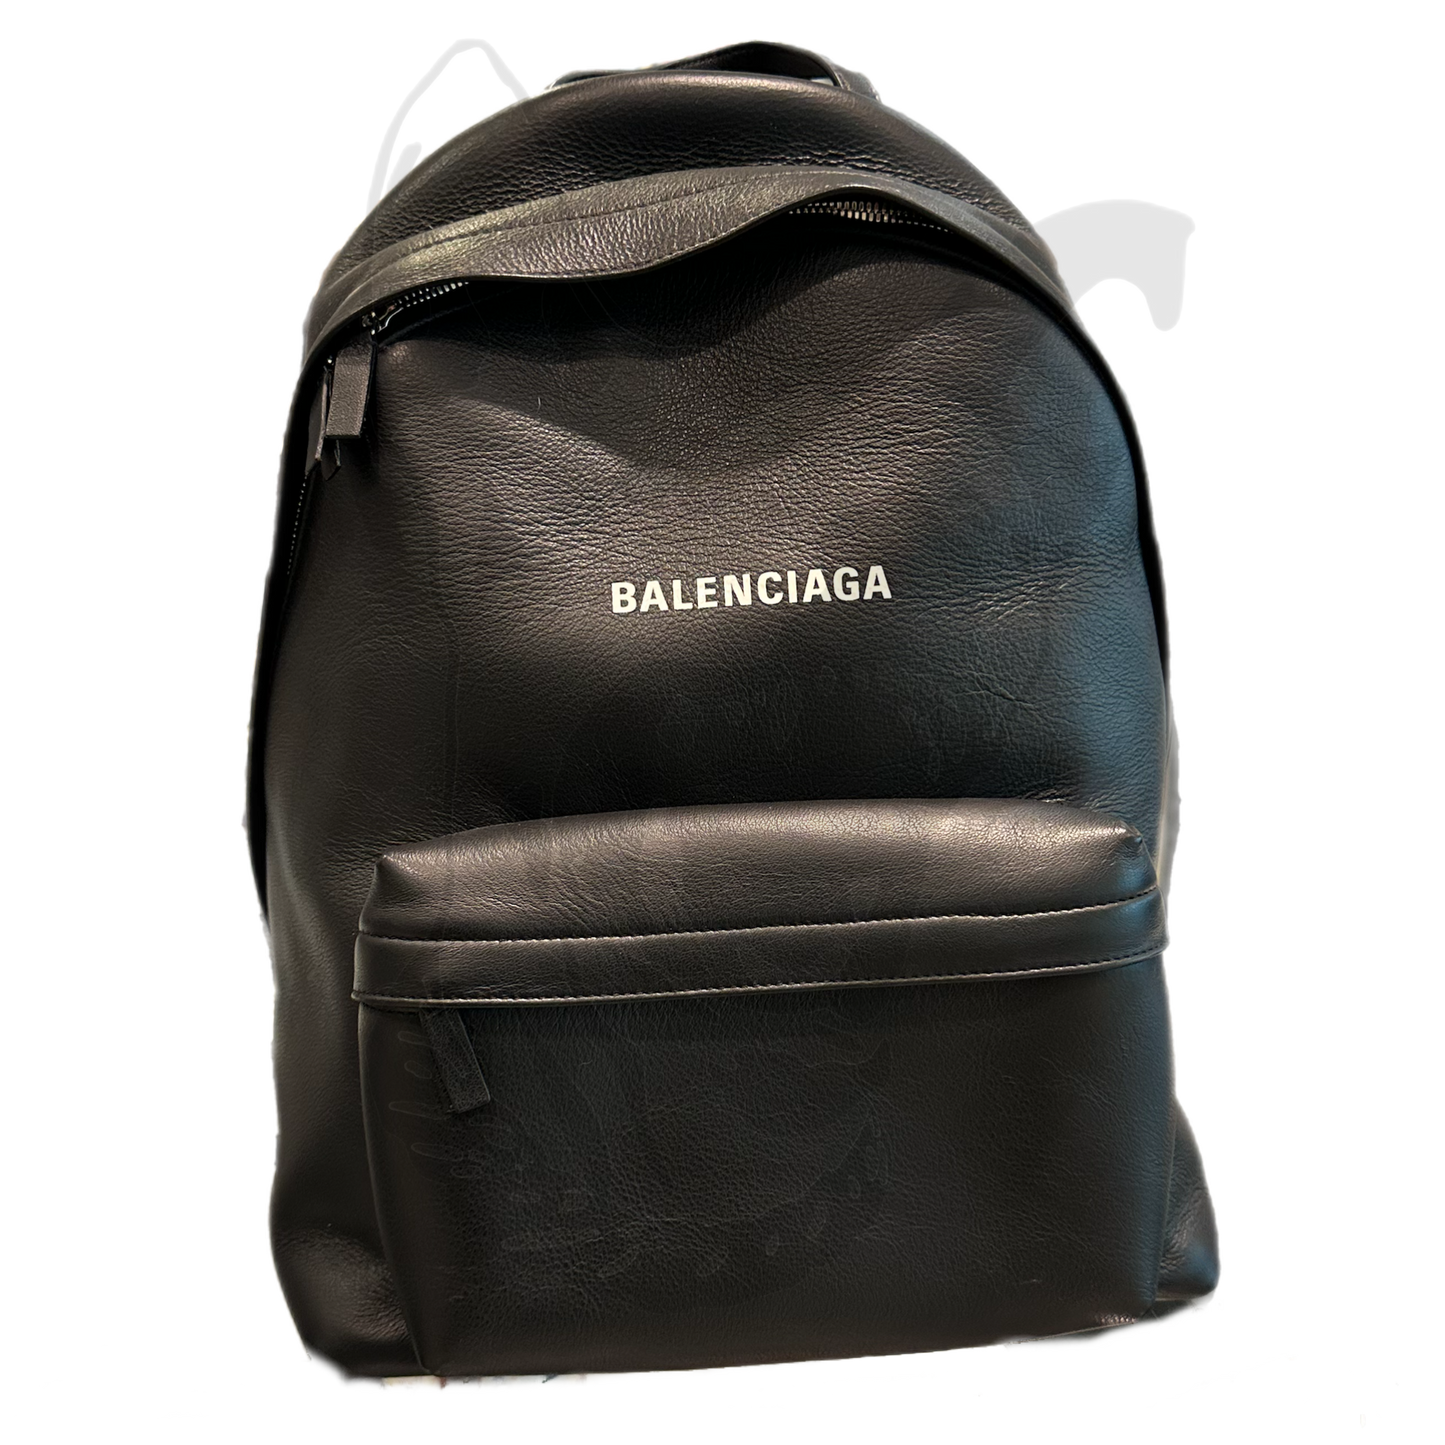 Balenciaga - "Black Backpack"